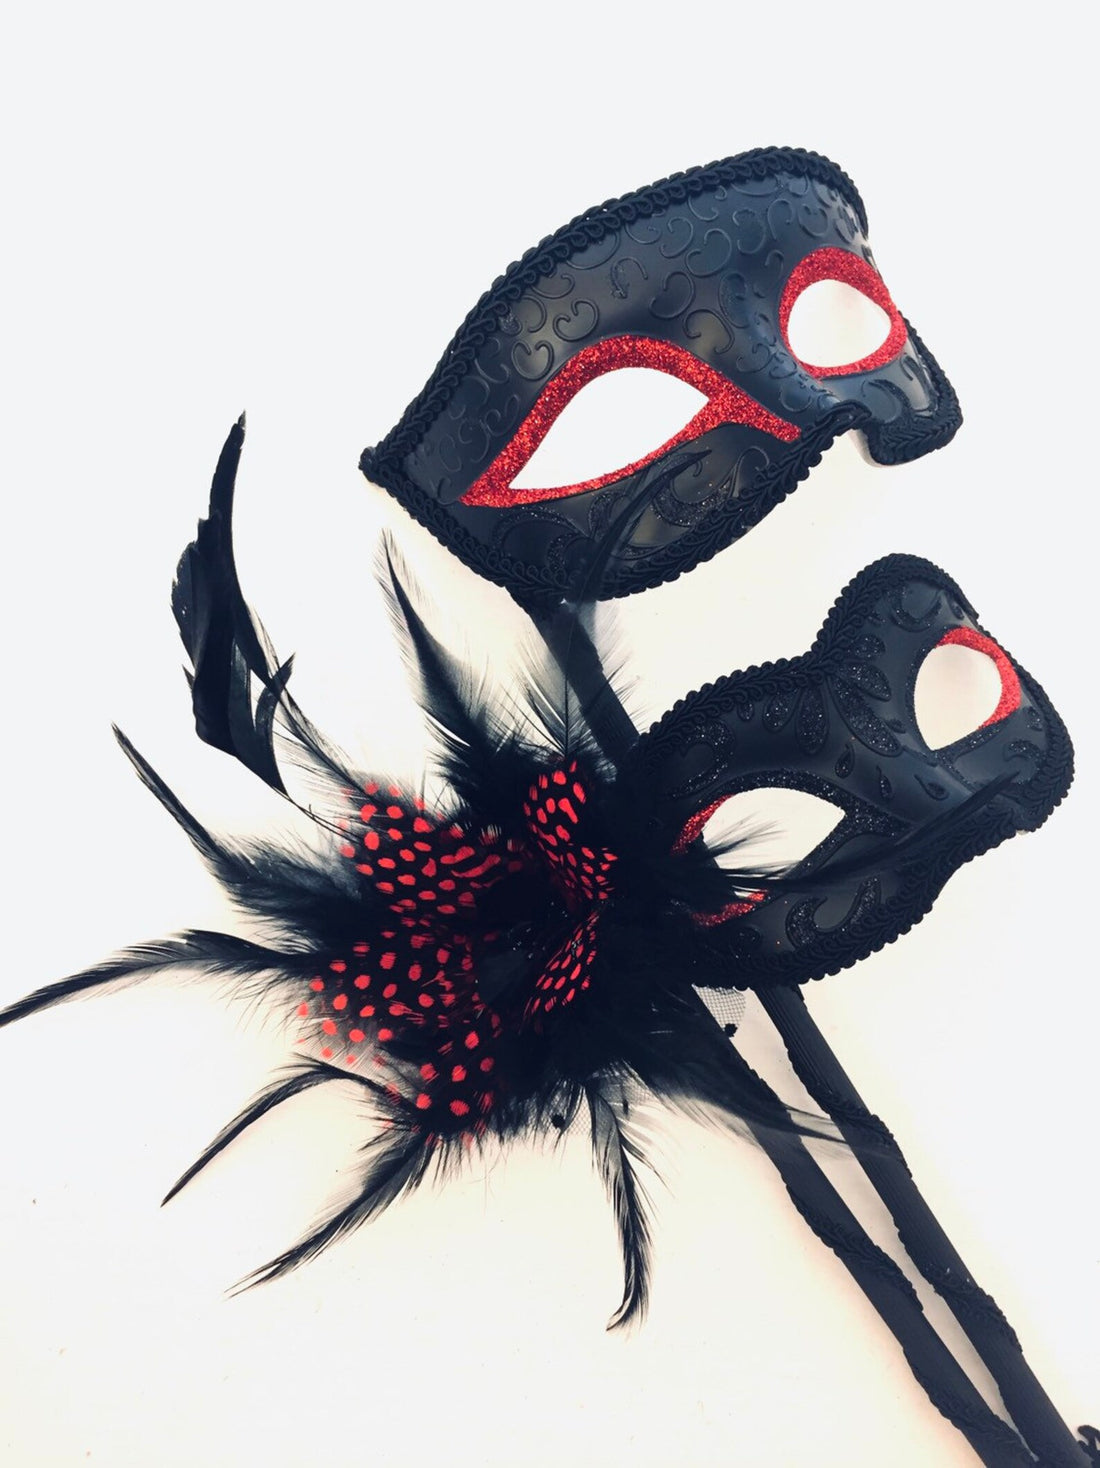 Black masks with red glitter eyes and black handheld tassel sticks.